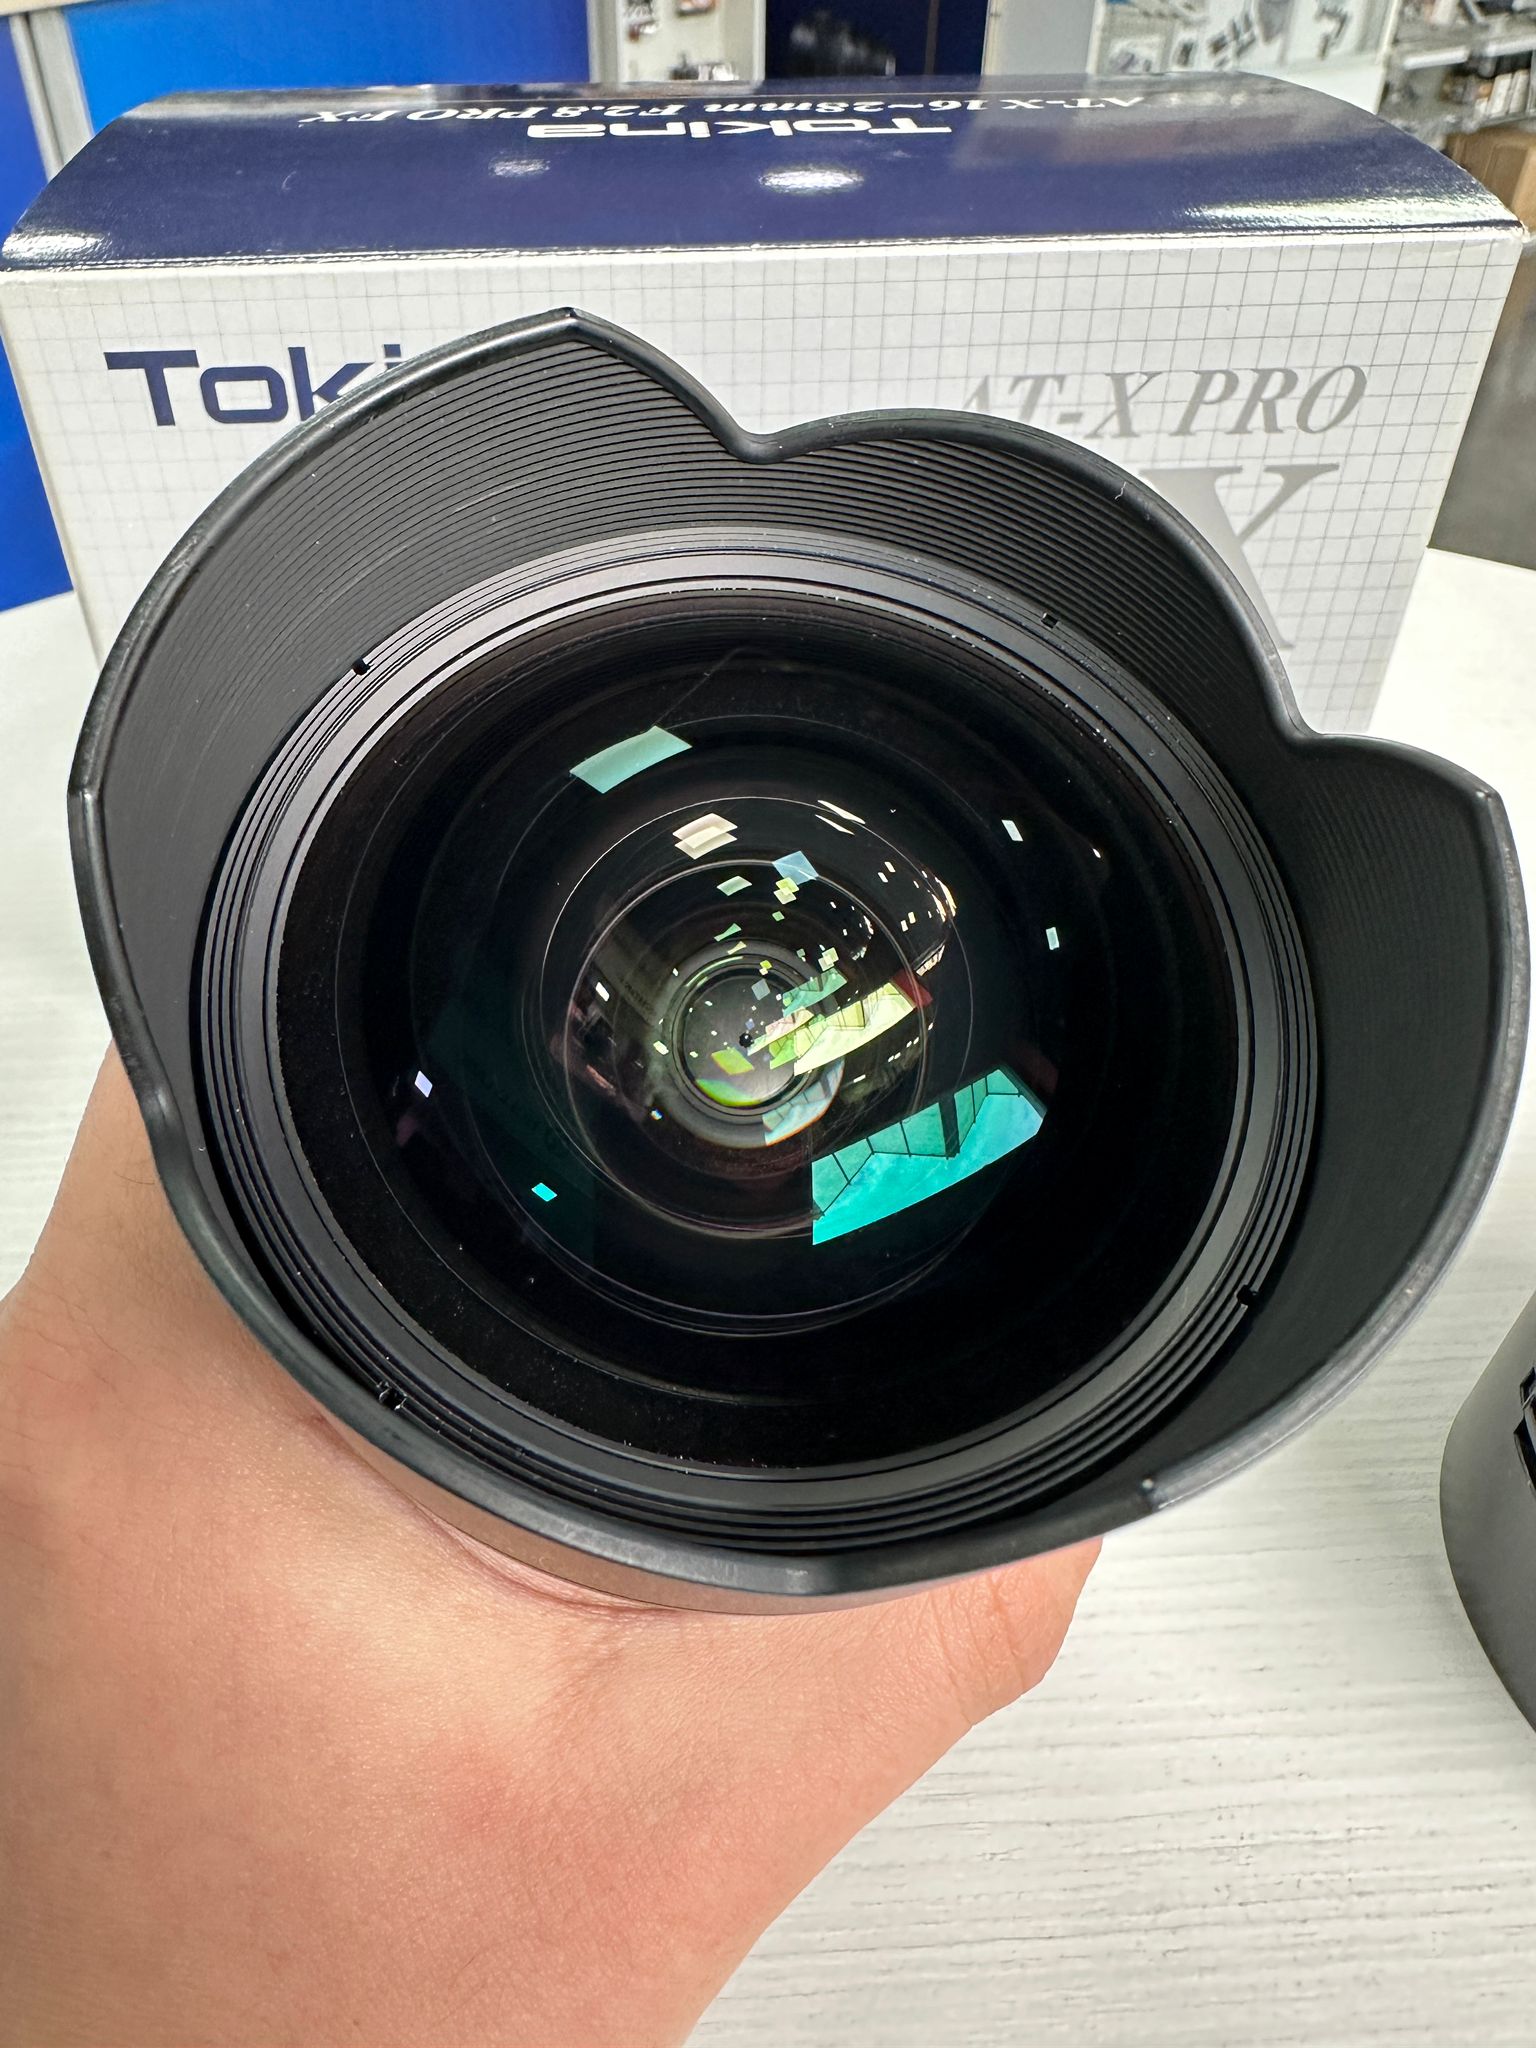 Tokina AT-X 16-28mm F2.8 PRO FX per Nikon Usato